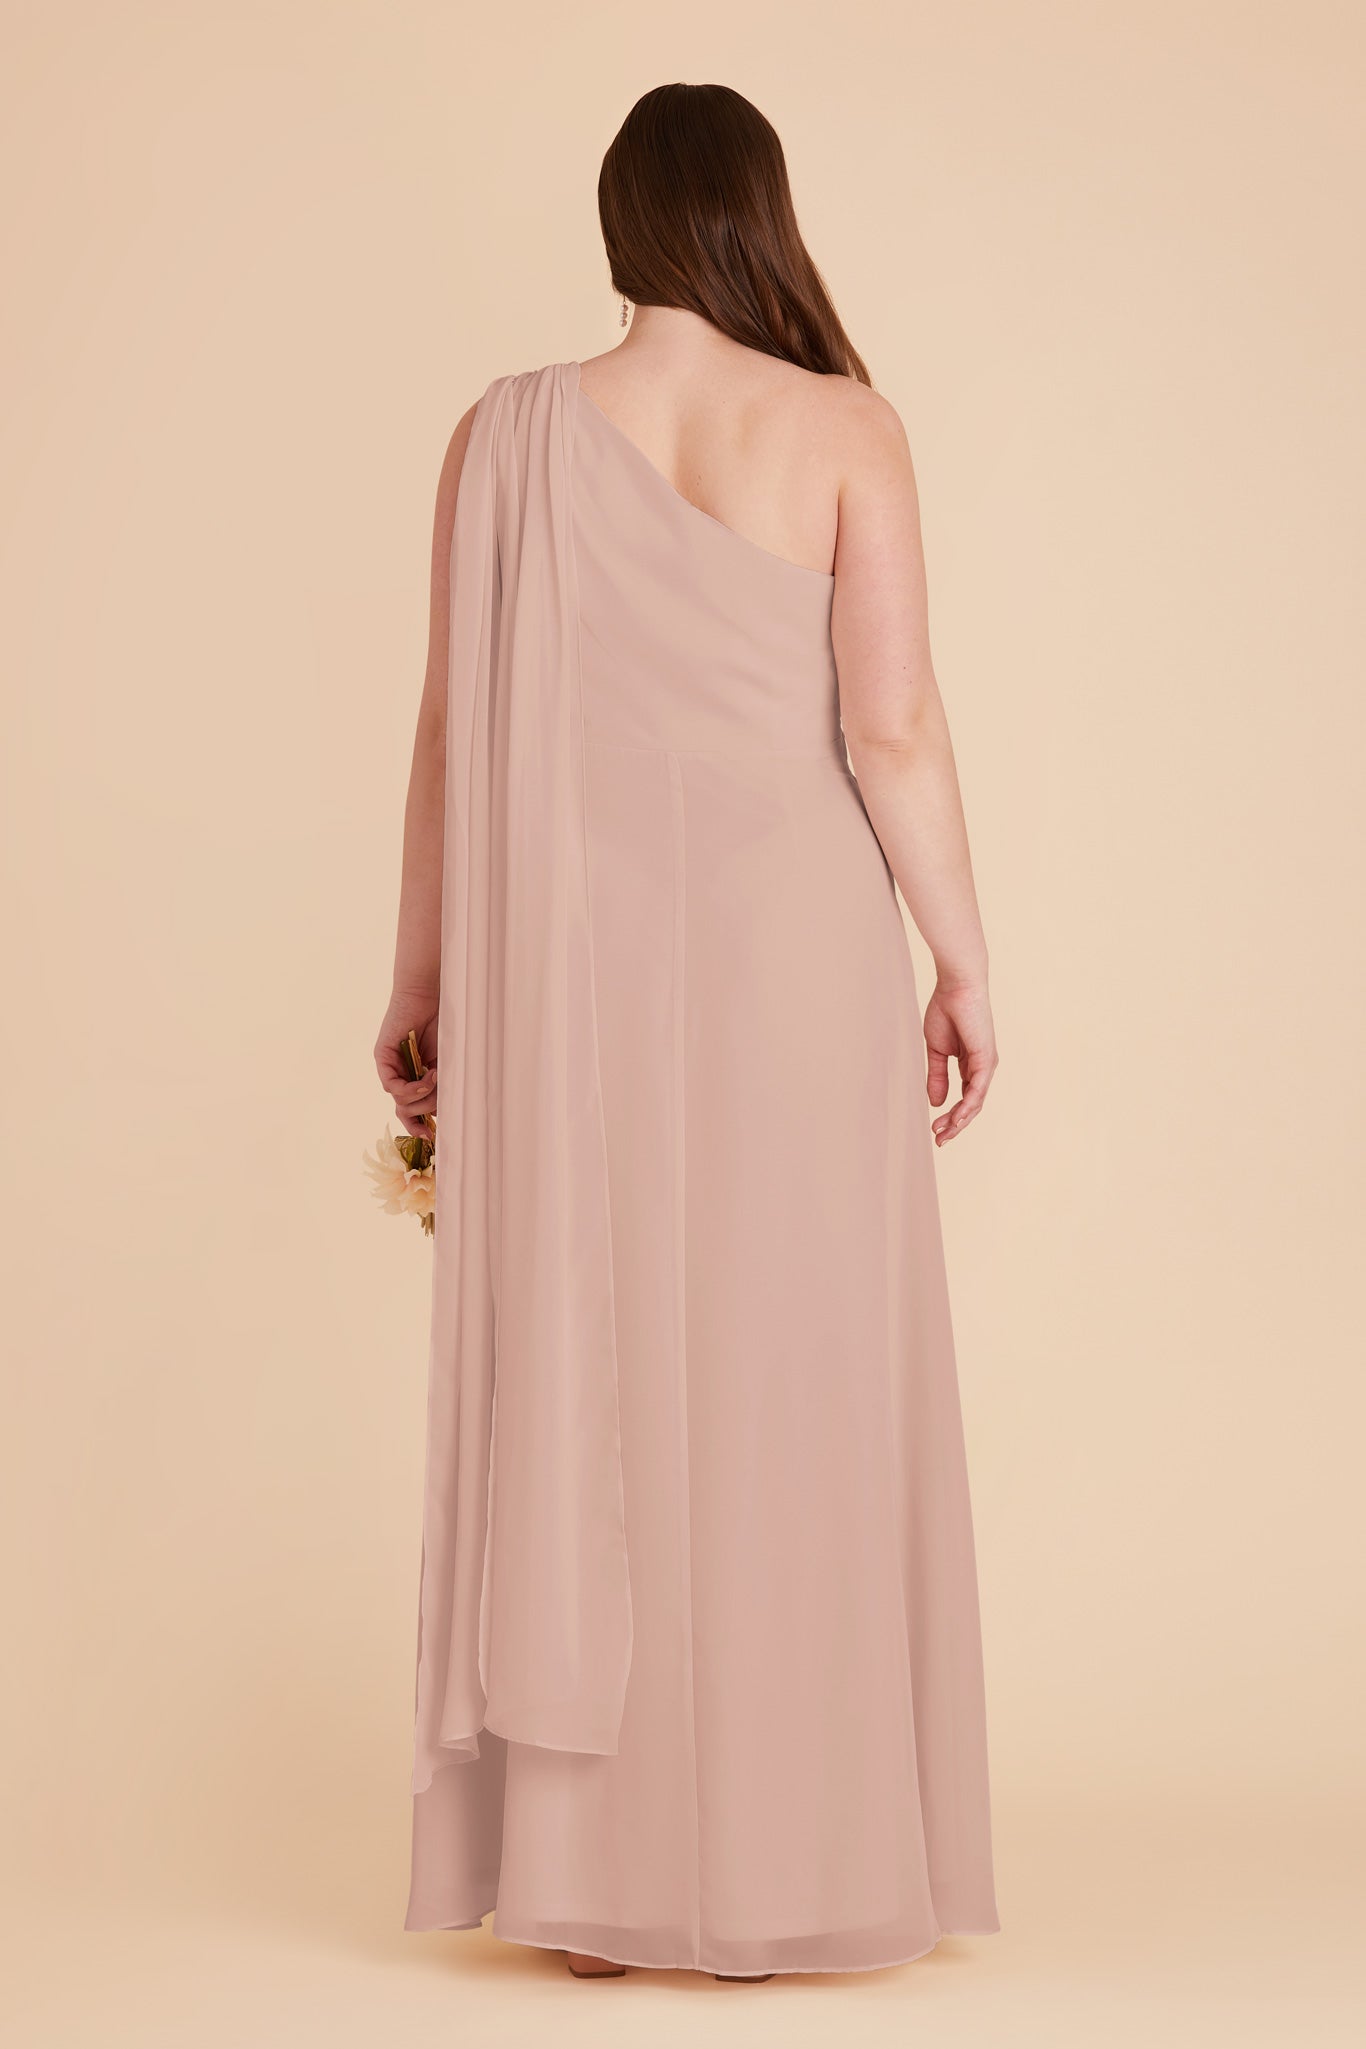 Taupe Melissa Chiffon Dress by Birdy Grey